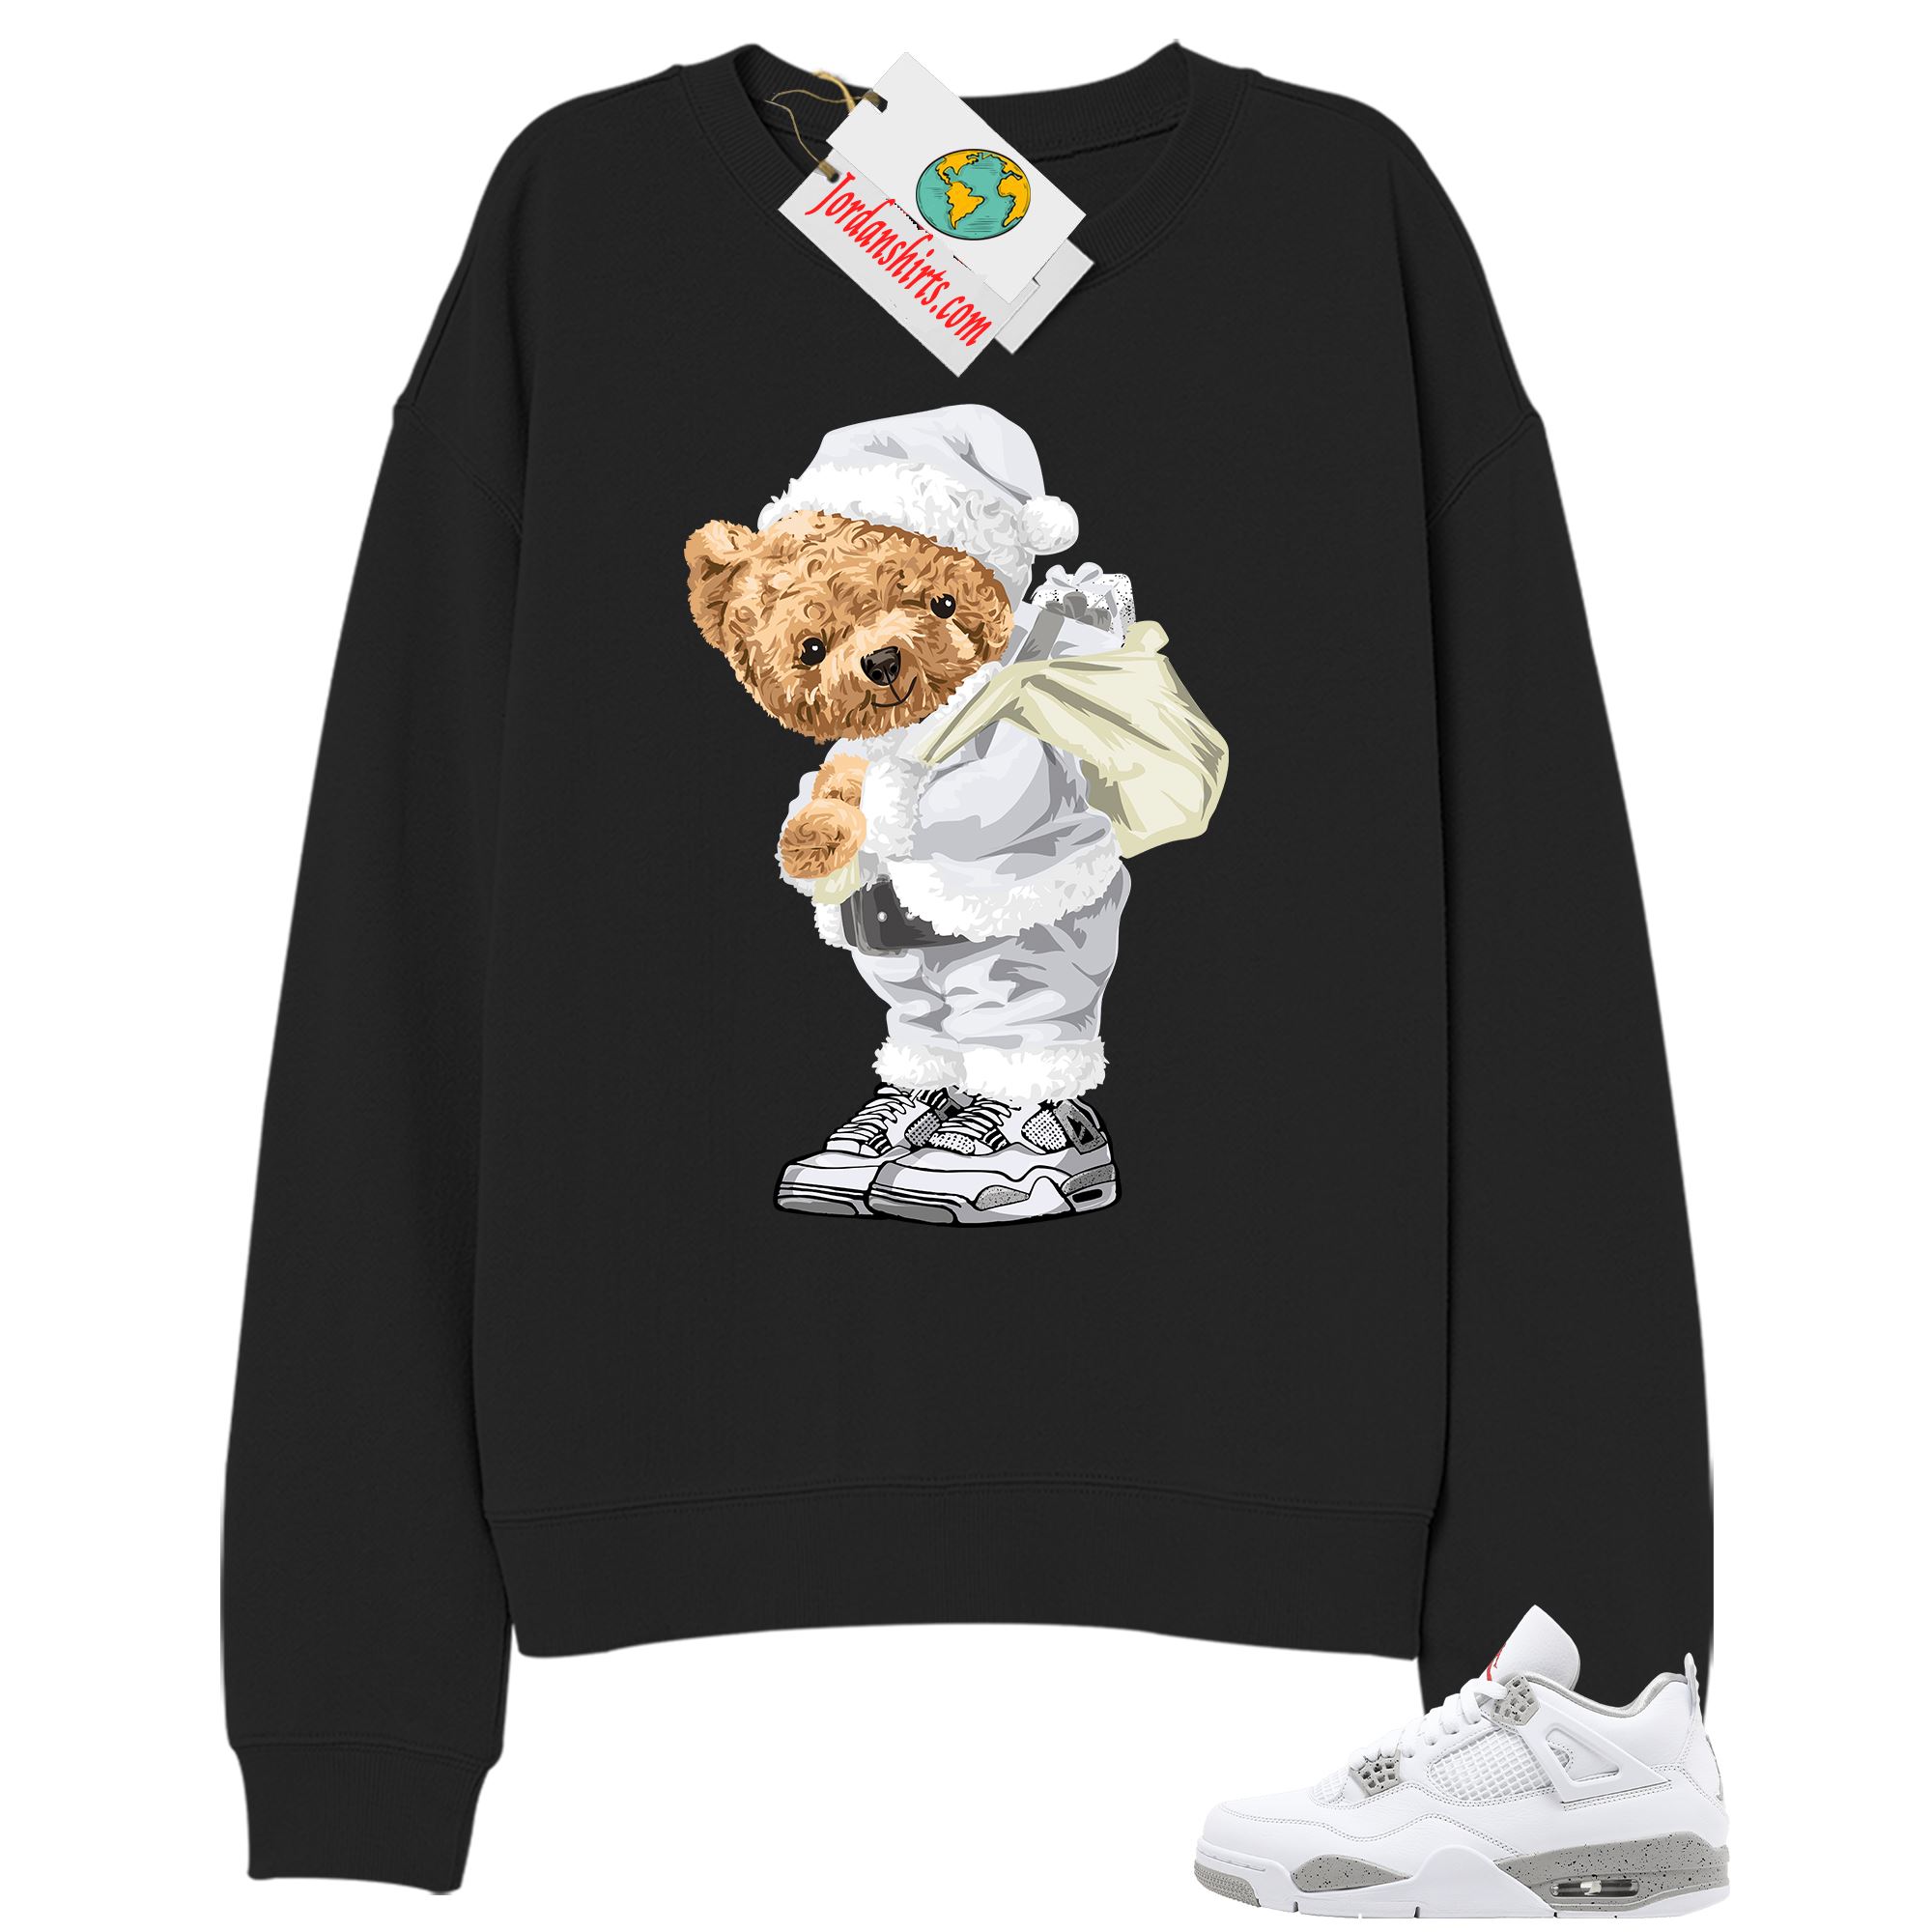 Jordan 4 Sweatshirt, Teddy Bear In Santa Claus Black Sweatshirt Air Jordan 4 White Oreo 4s Size Up To 5xl